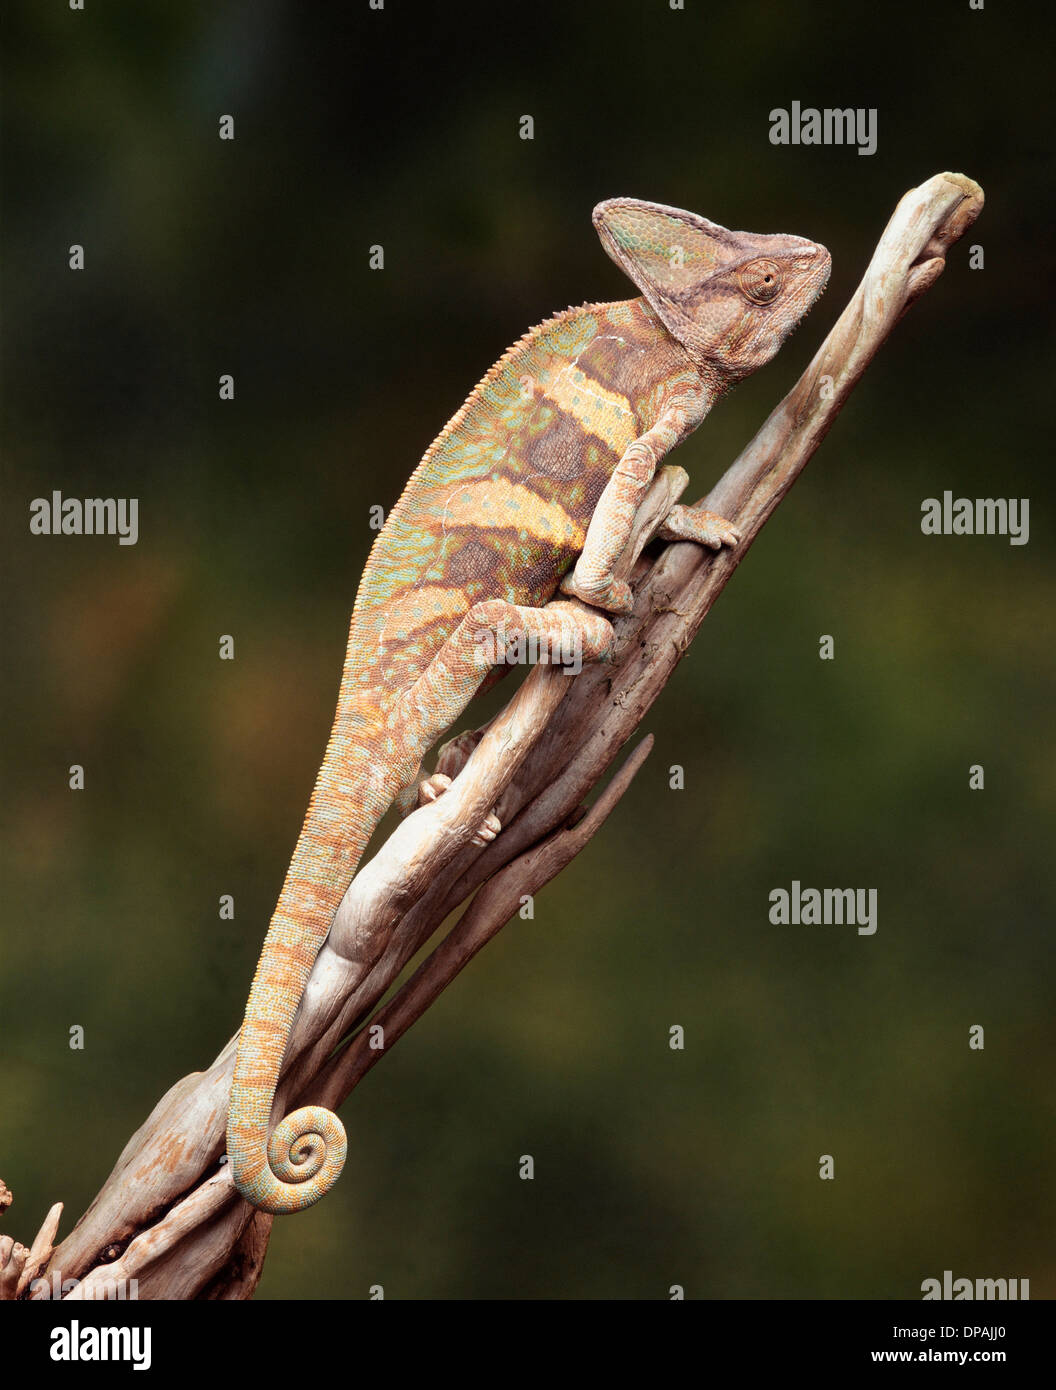 Chameleon on a branch Stock Photo